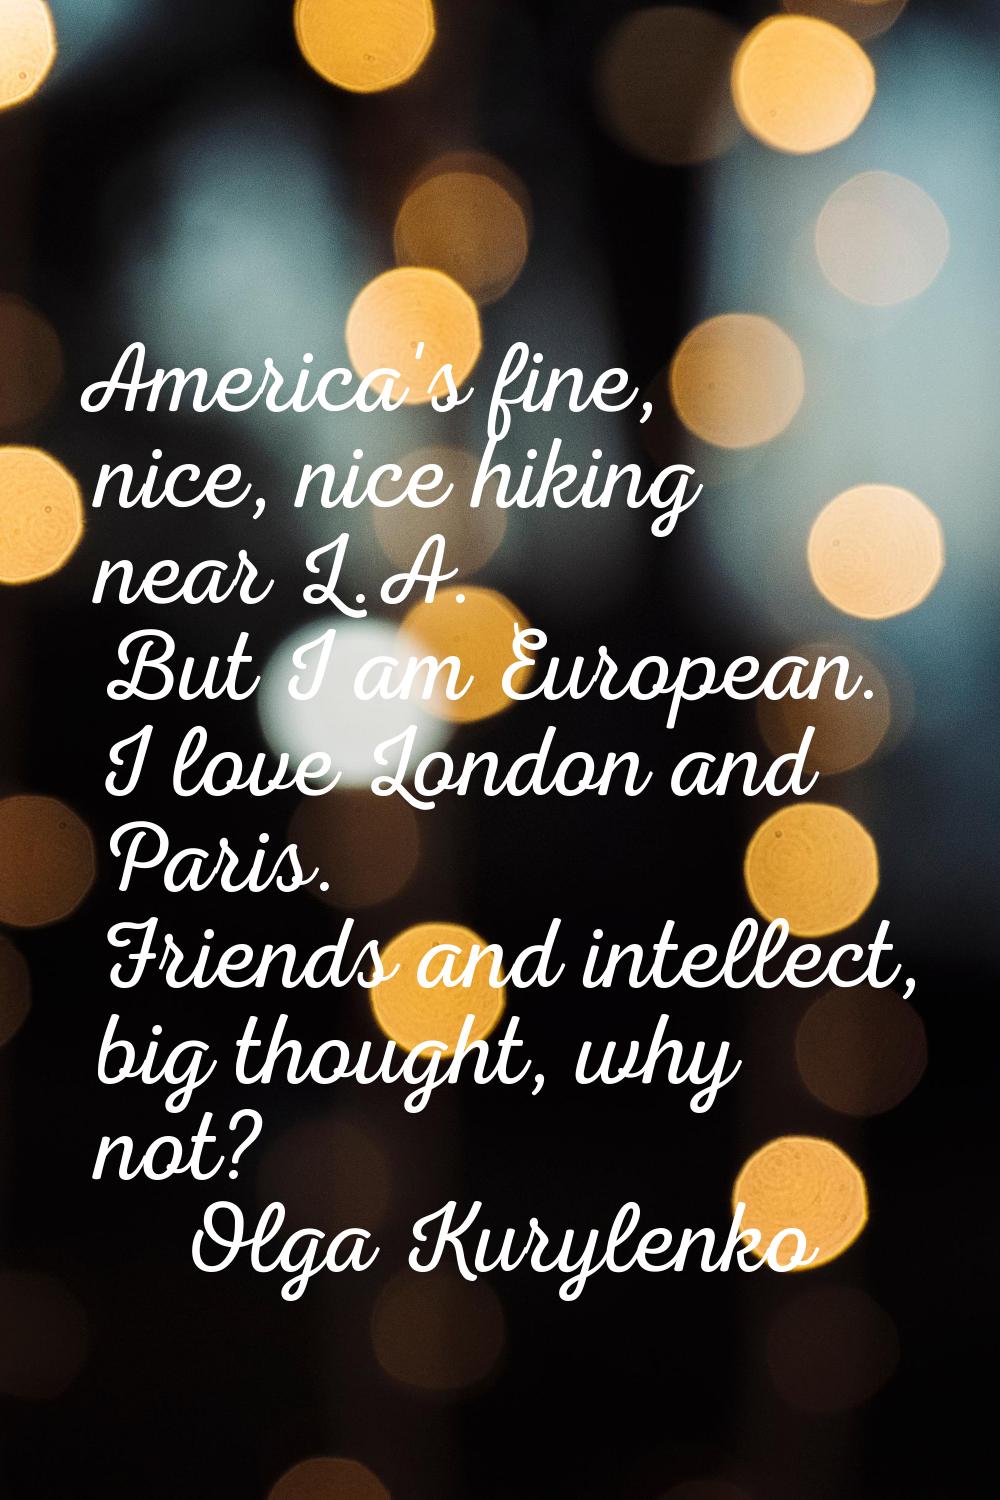 America's fine, nice, nice hiking near L.A. But I am European. I love London and Paris. Friends and